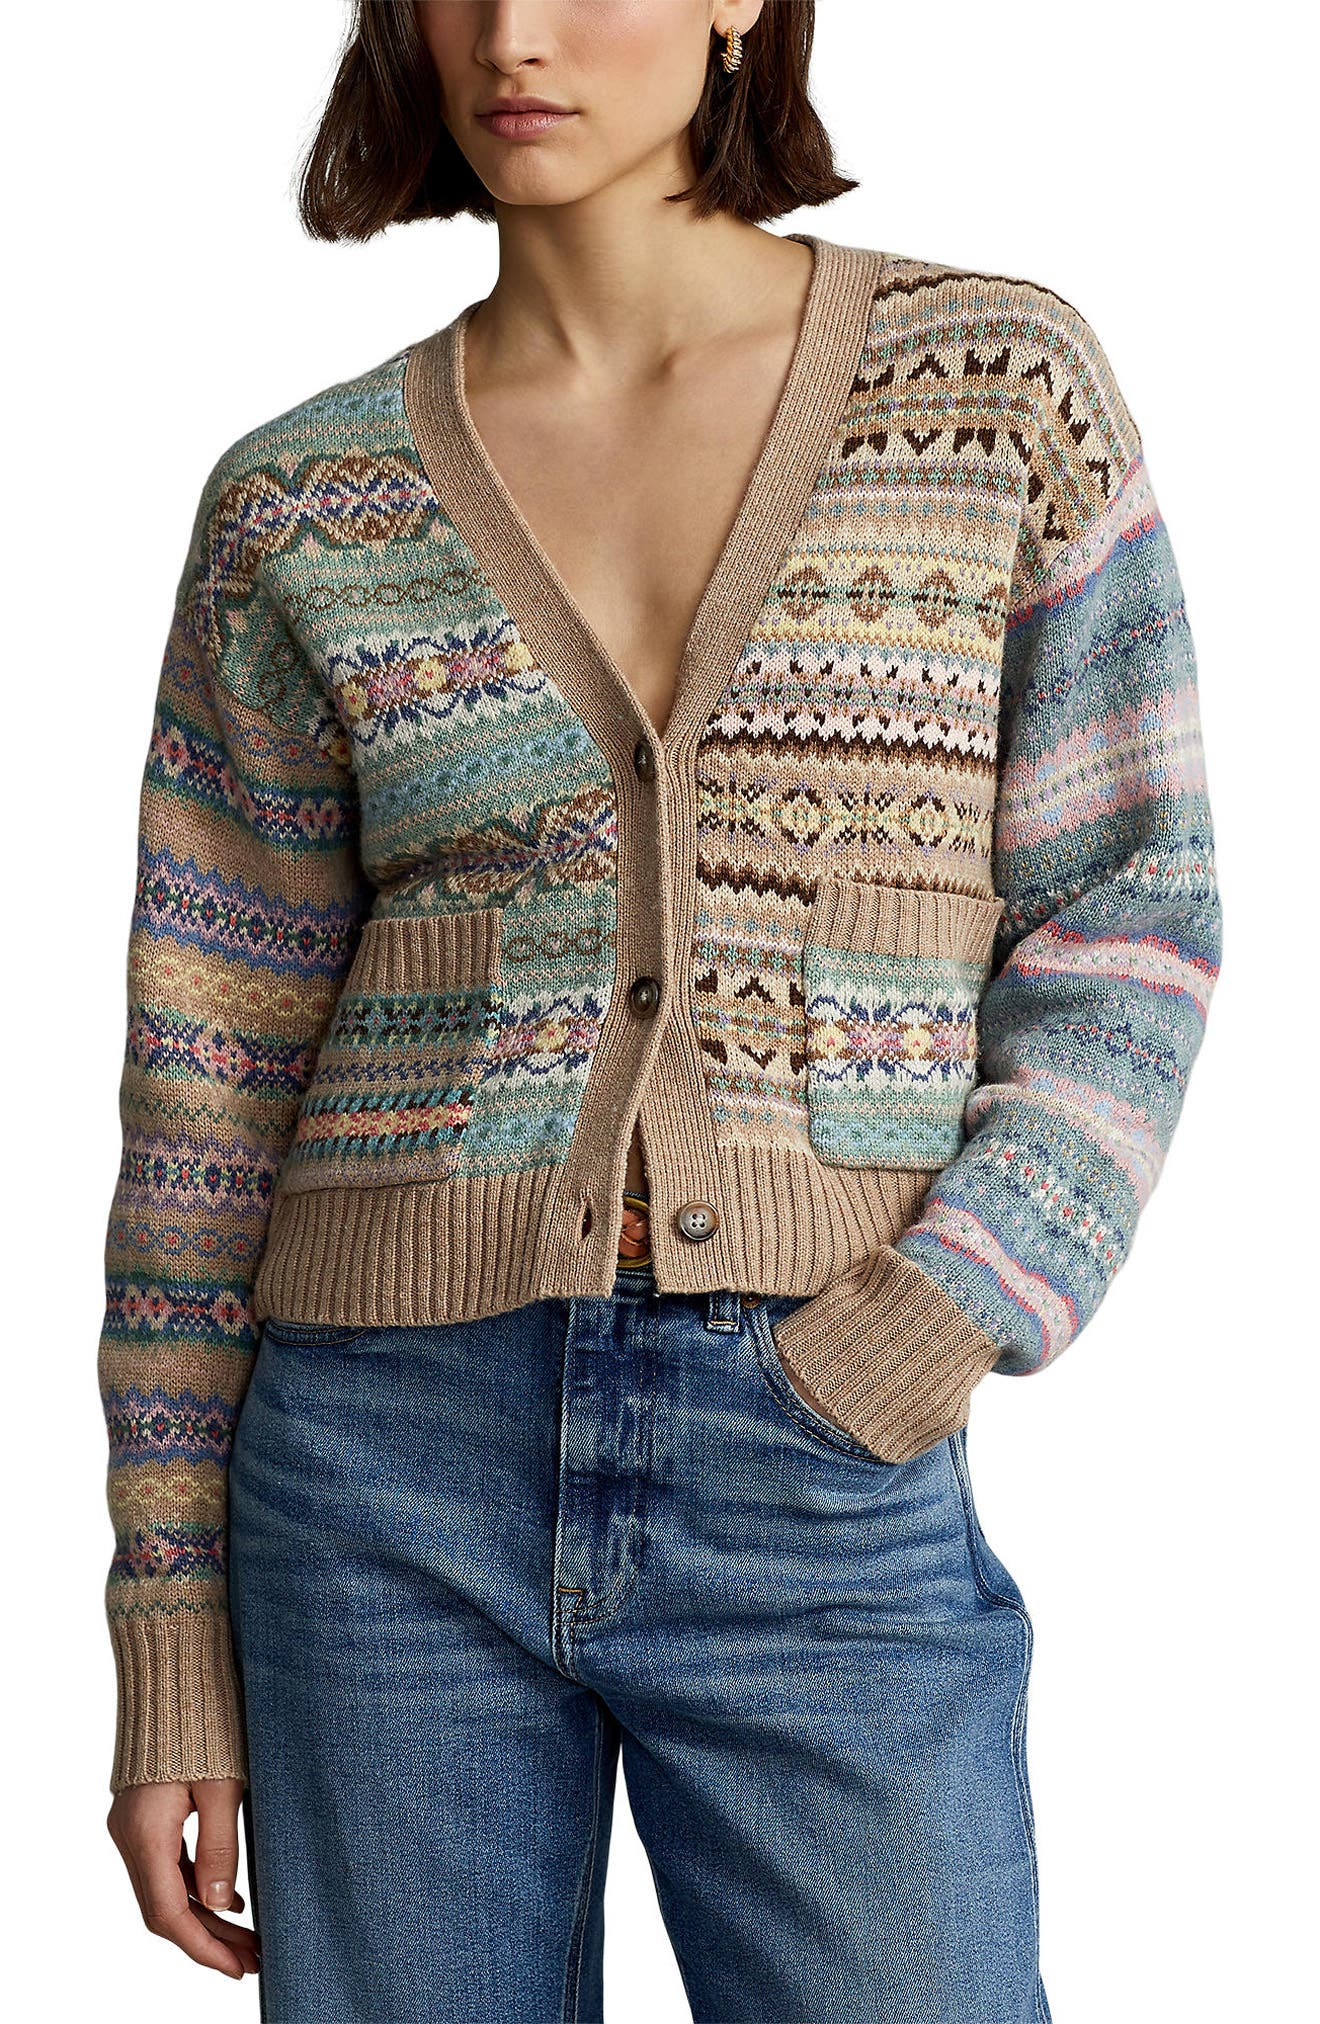 Women's Long Sleeve V-Neck Basic Top Cashmere Blend sweater Knit Jumper  XS-M 